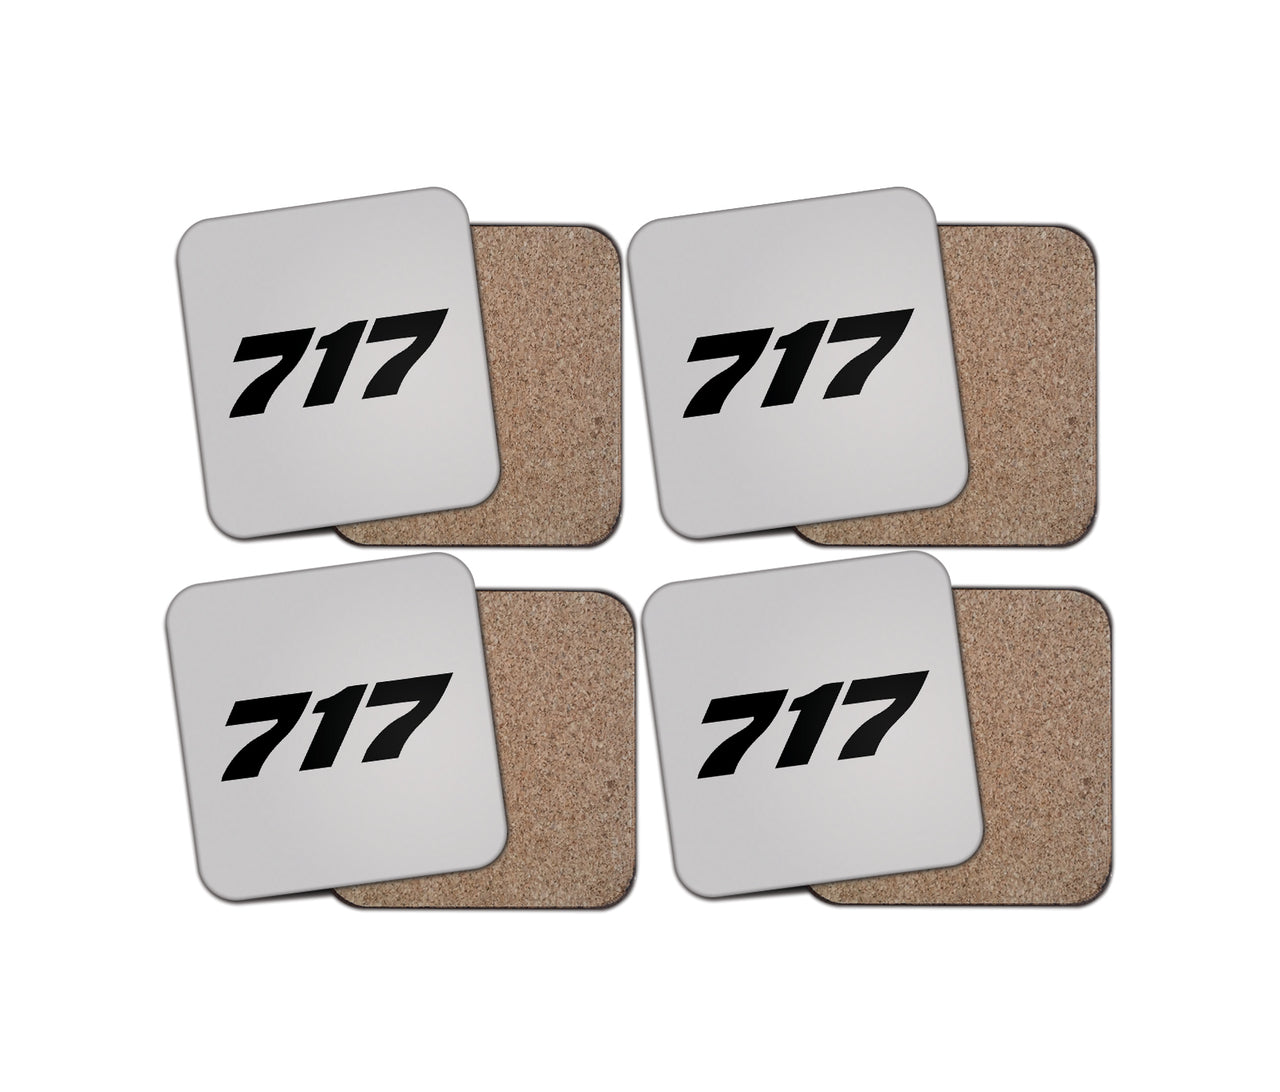 717 Flat Text Designed Coasters